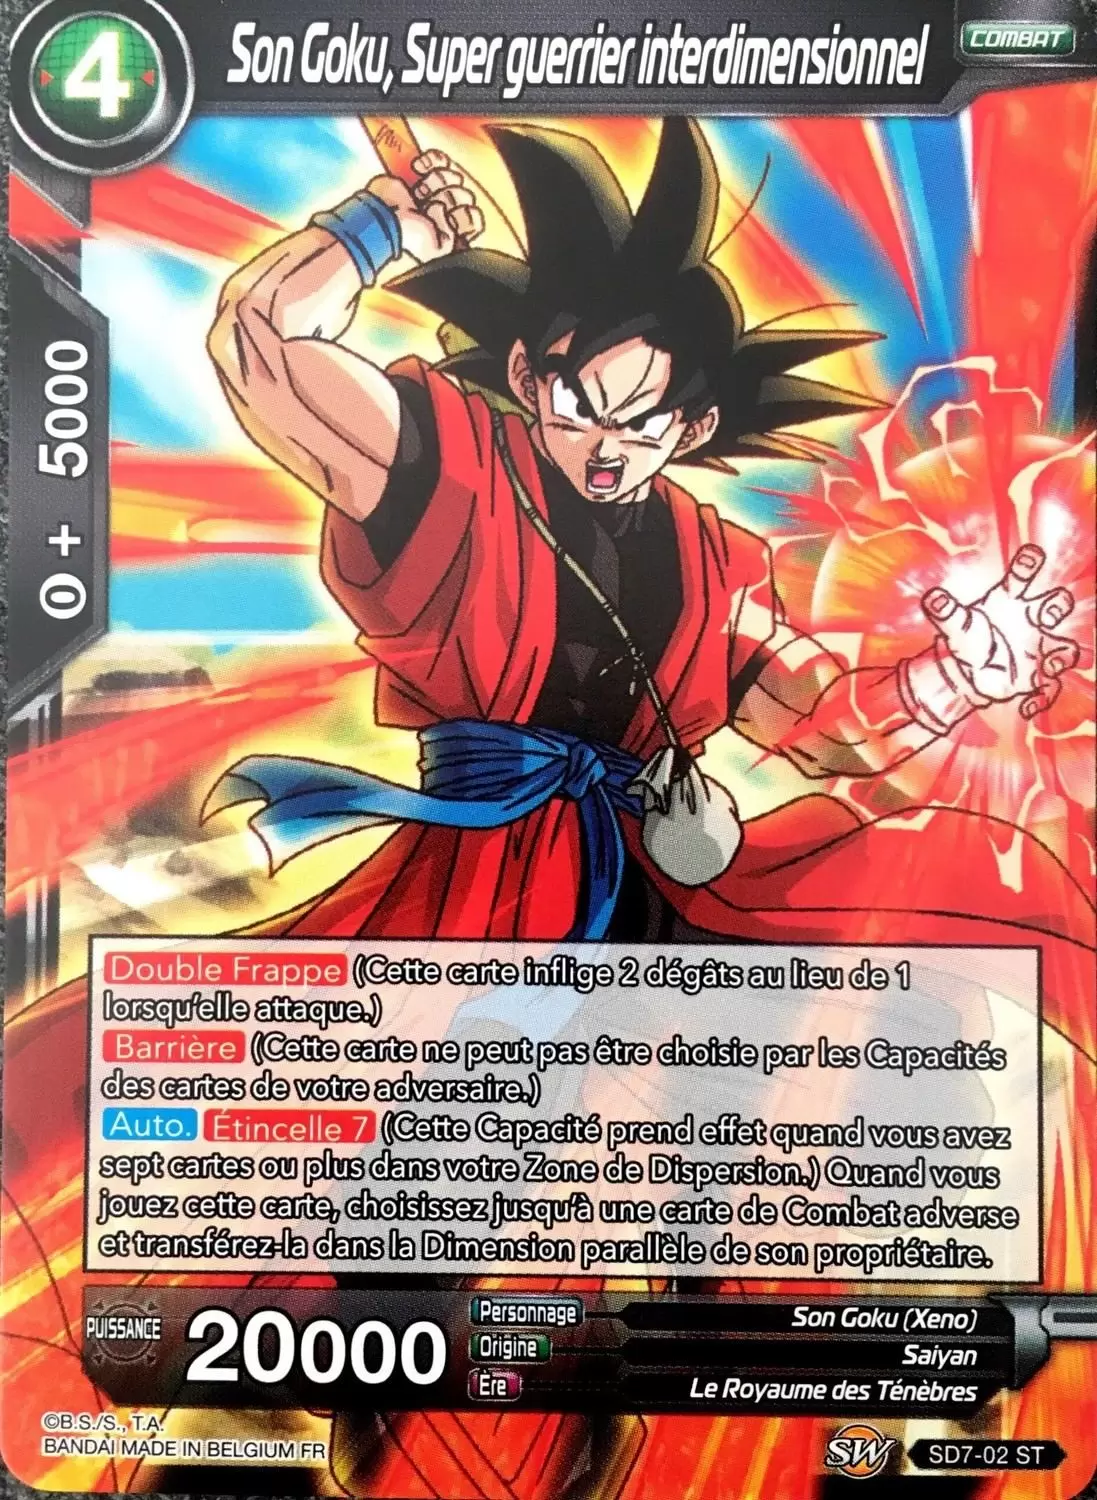 Sheron Advent [SD7] - Son Goku, super guerrier interdimensionnel